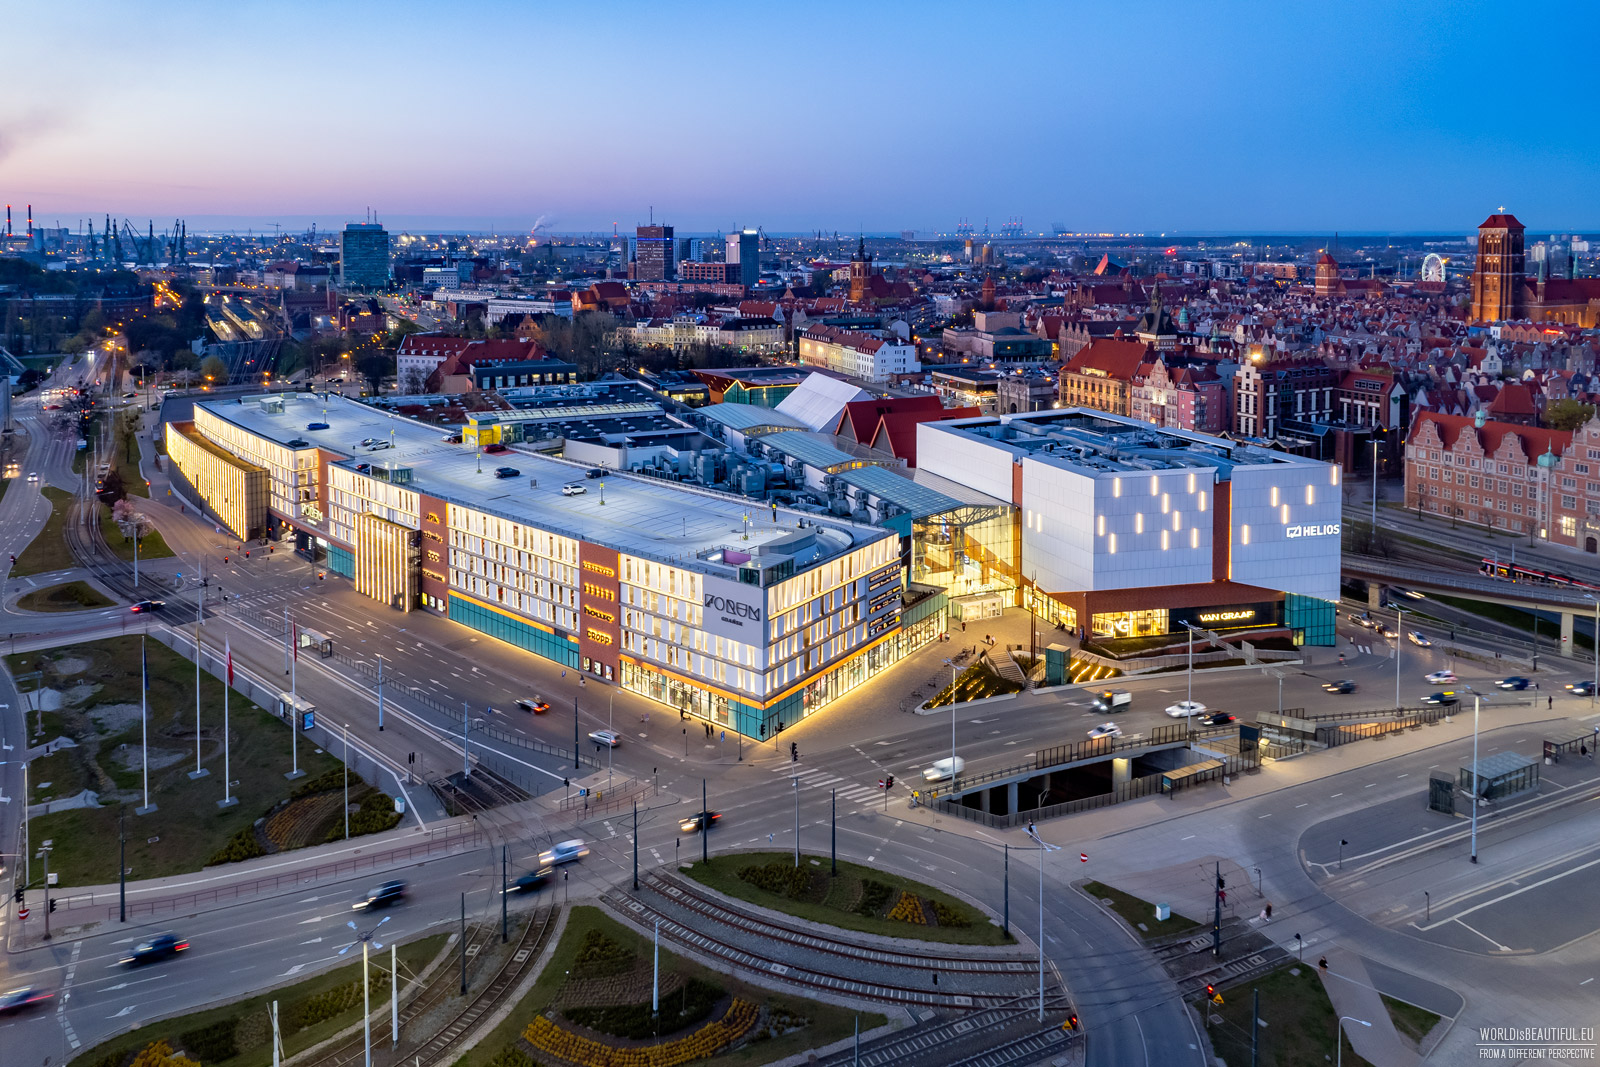 Forum shopping center in Gdańsk